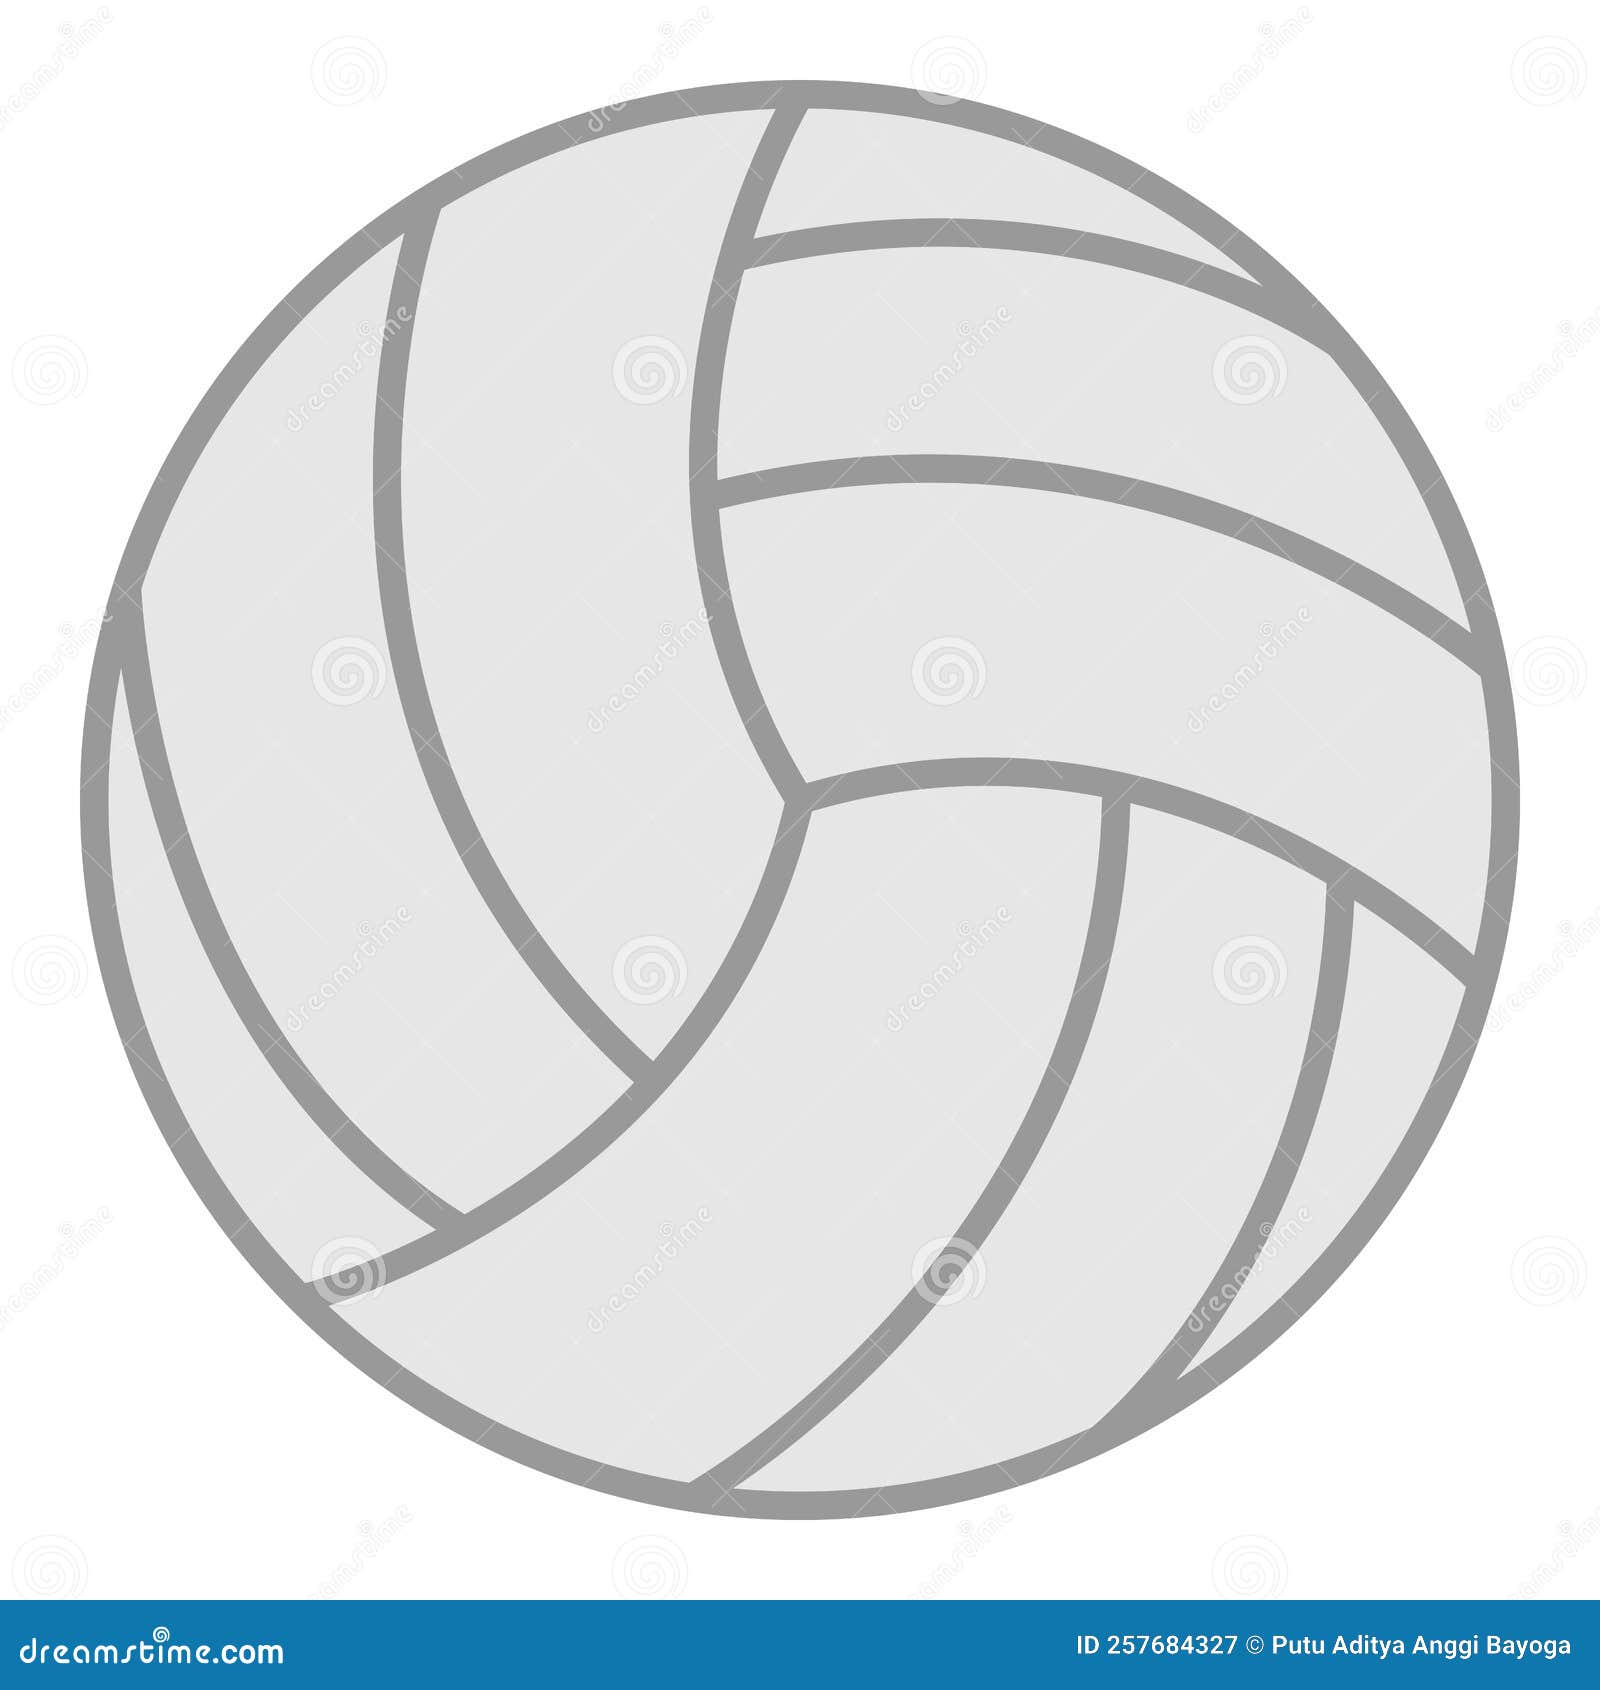 Cartoon volleyball ball stock vector. Illustration of simple - 257684327